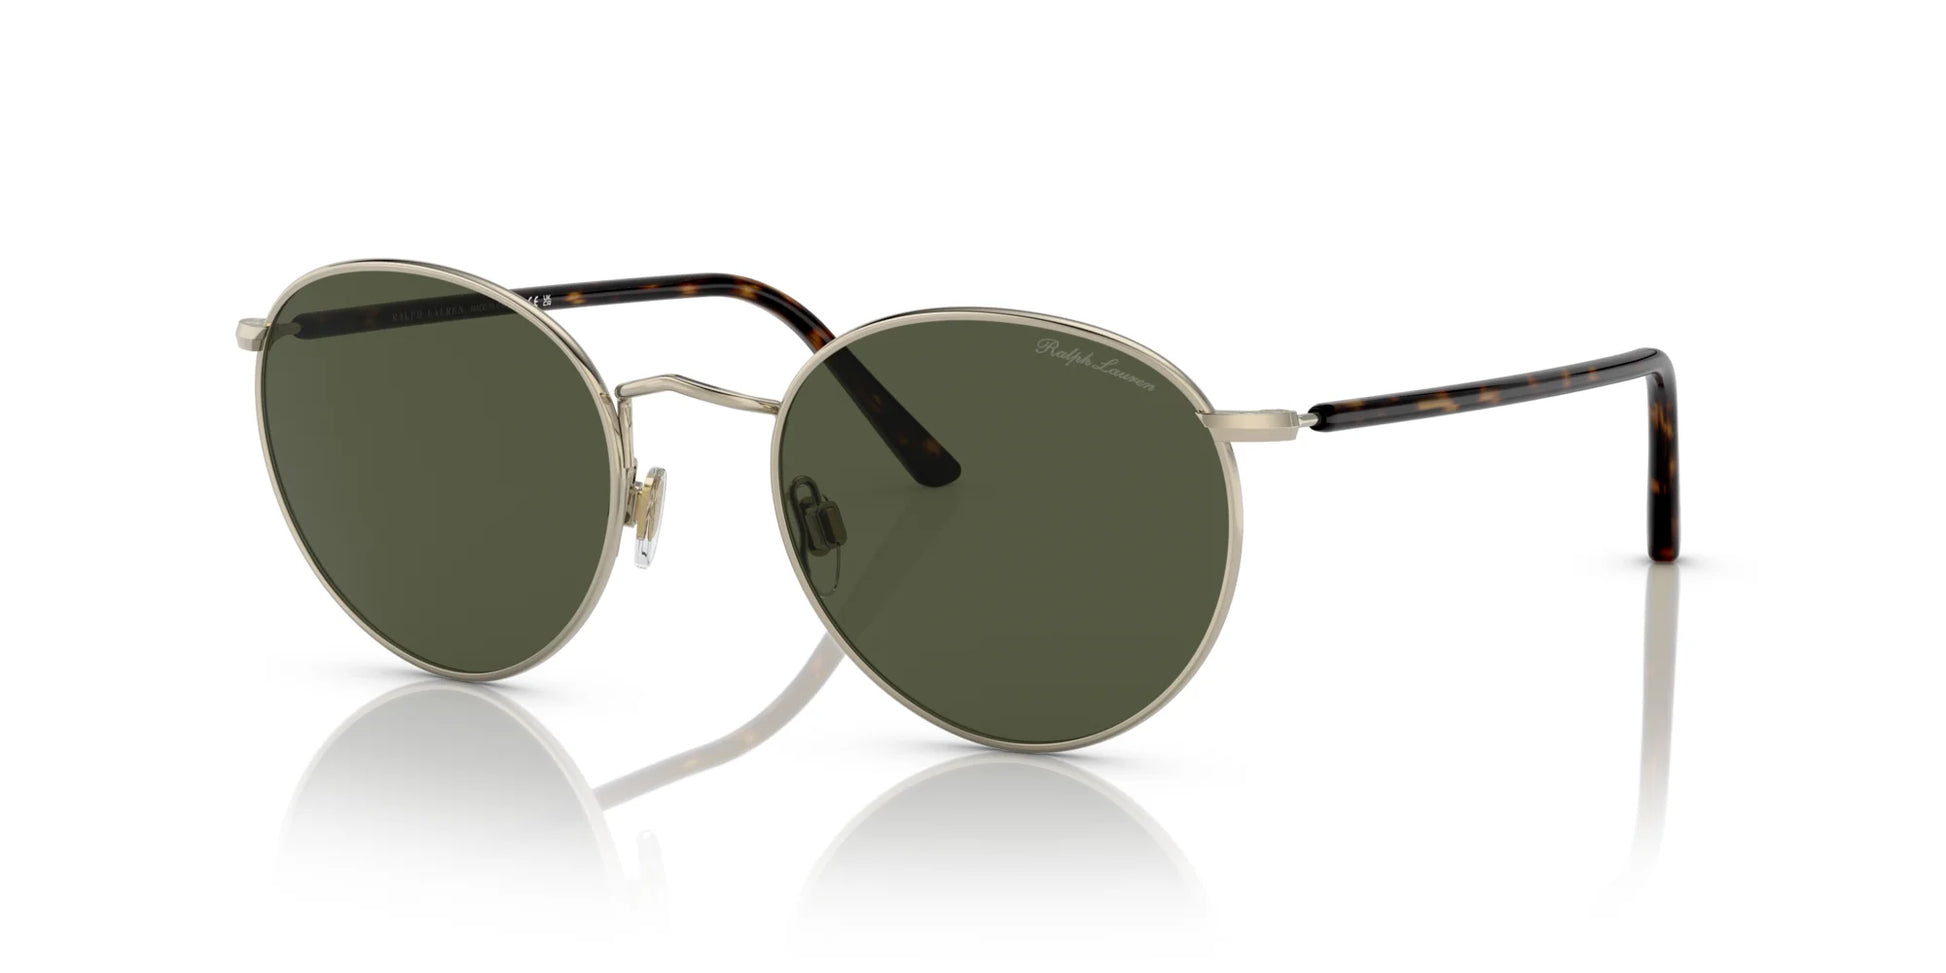 Ralph Lauren RL7076 Sunglasses Shiny Pale Gold / Green